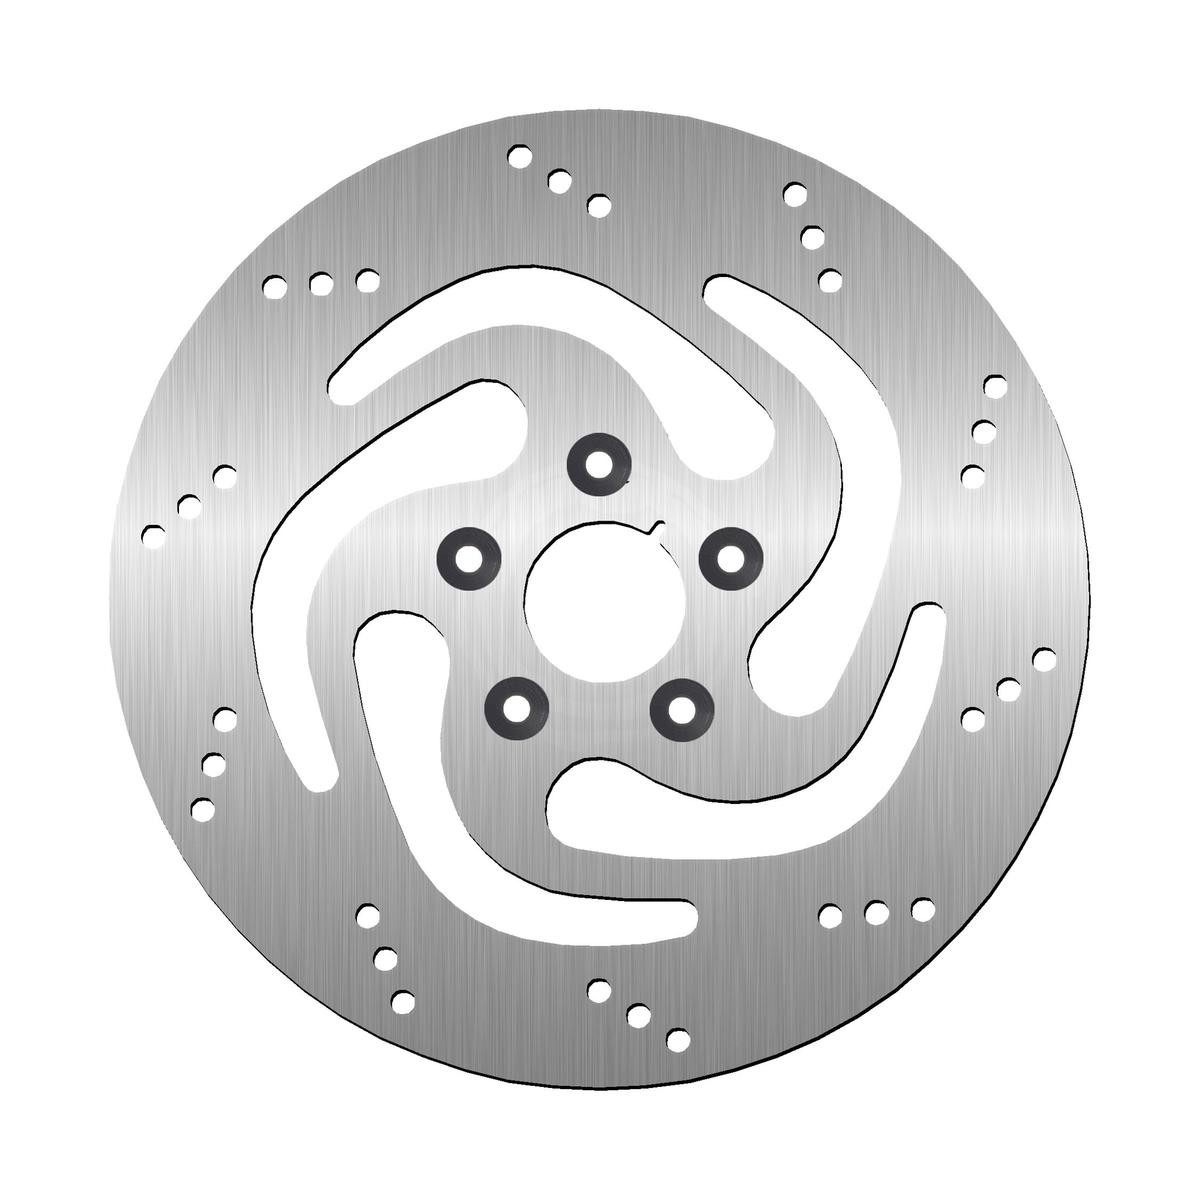 NG Rear, 292x5.8mm, 5 Ø: 292mm, Num. of holes: 5, Brake Disc Thickness: 5.8mm Brake rotor 742 buy